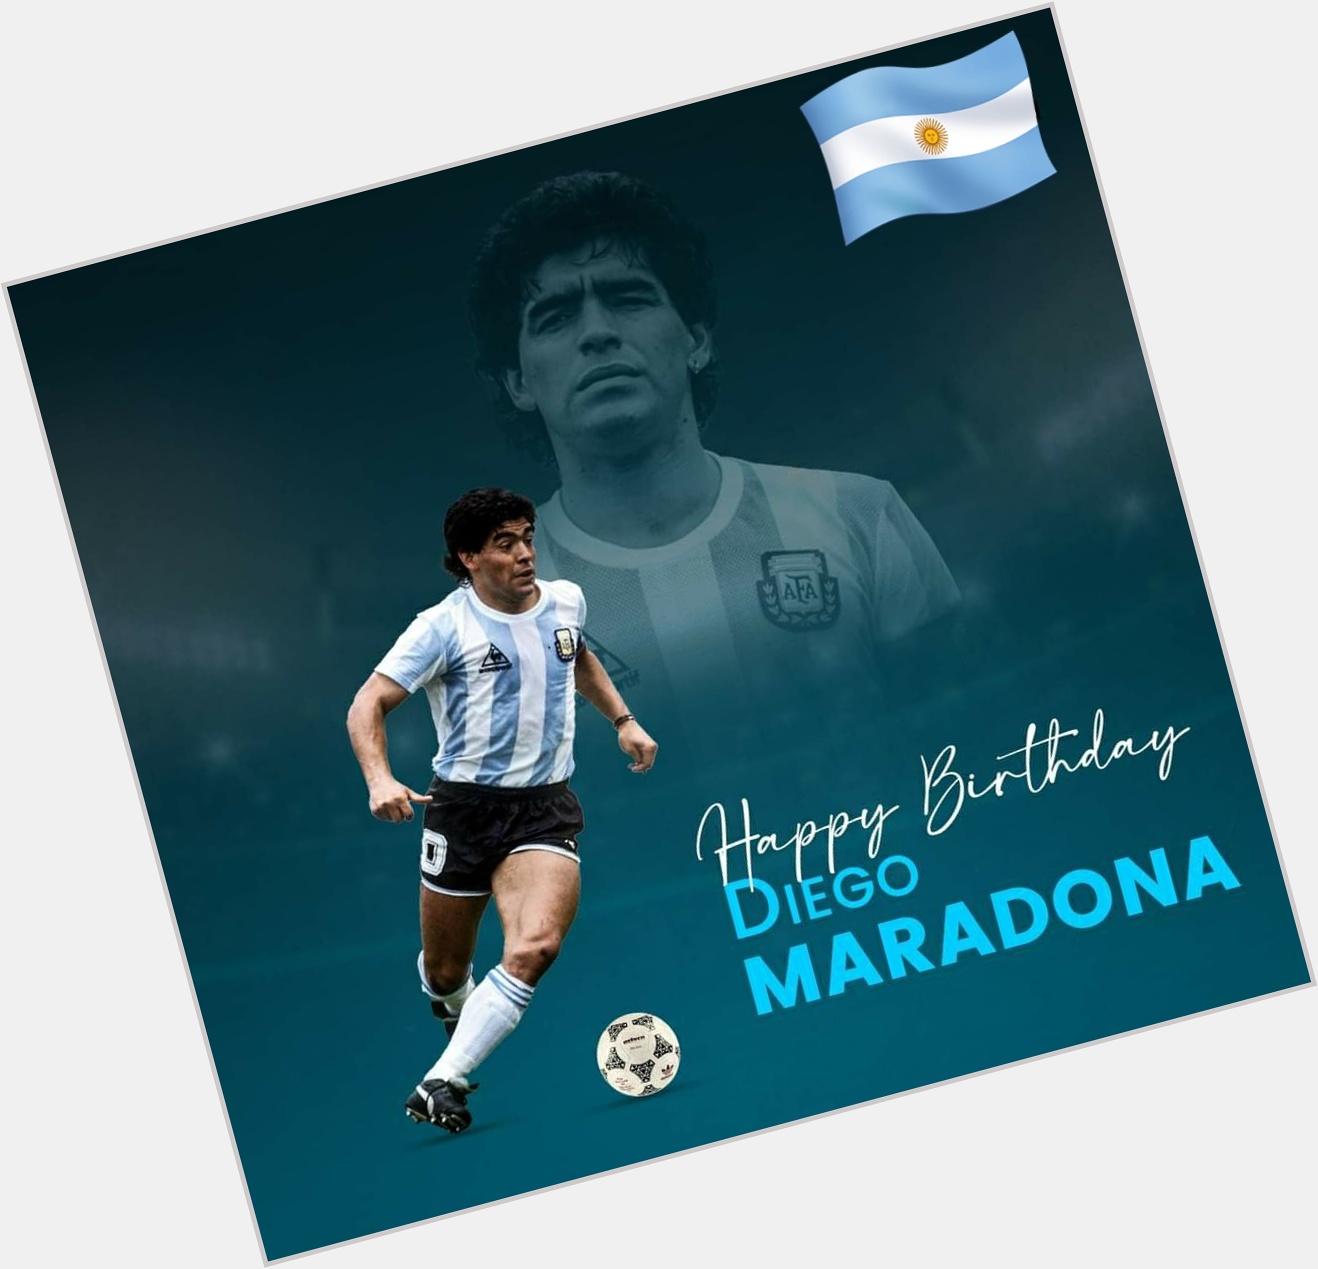 Happy birthday to the prince of football, Diego Maradona, the Argentinian football king. 